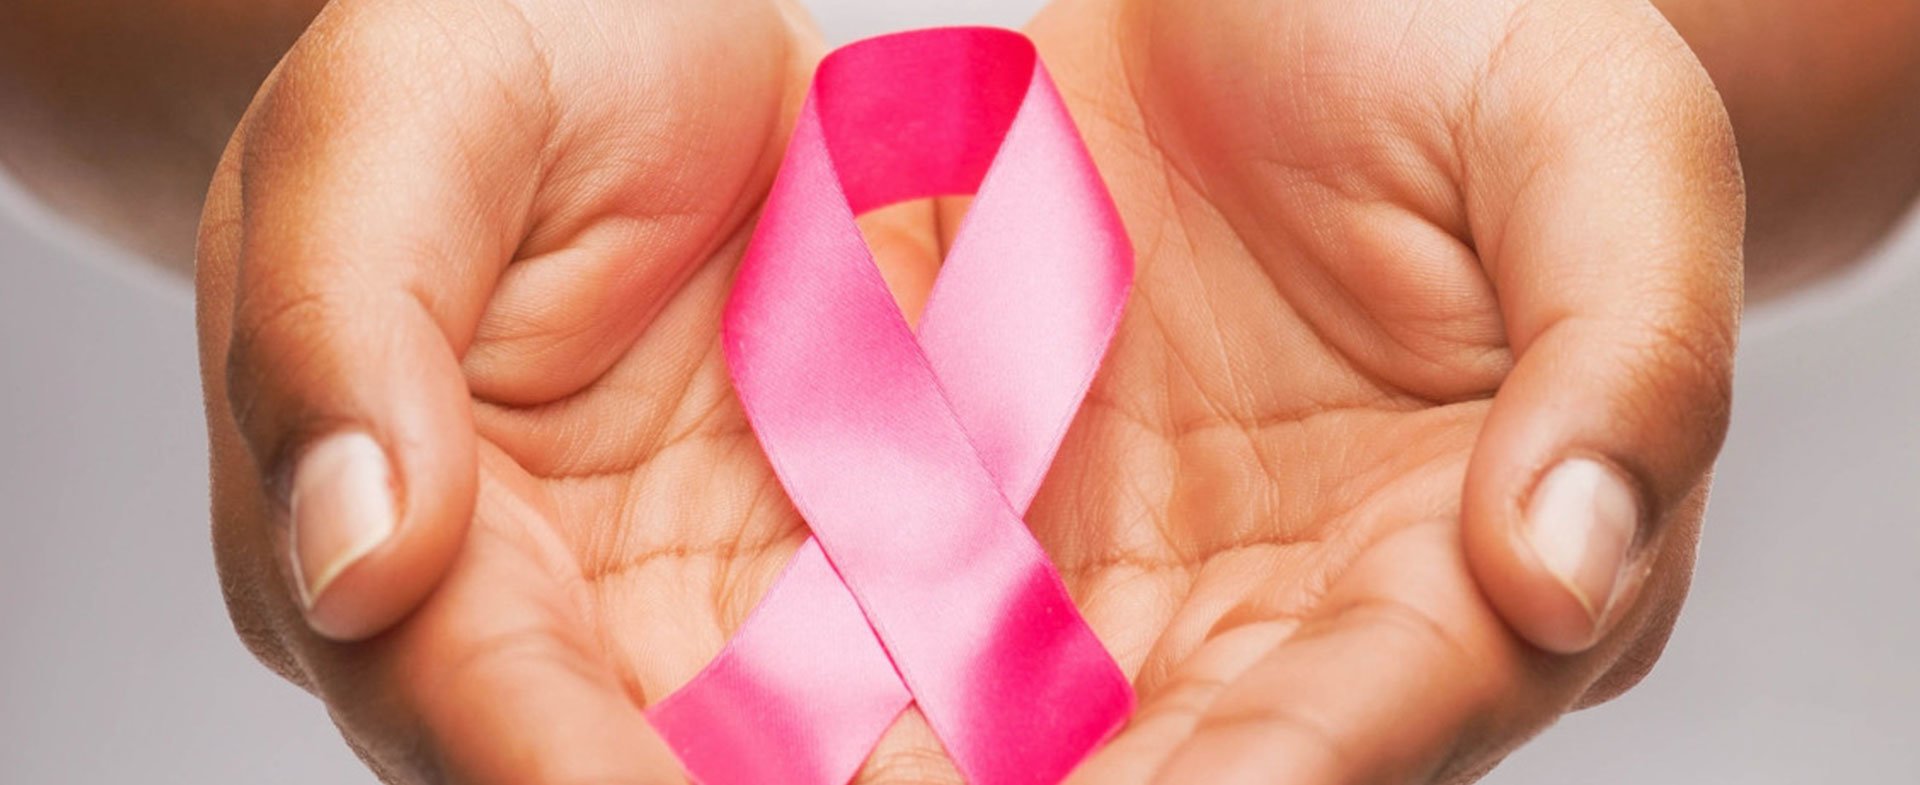 mammogram guidelines2 1140x570